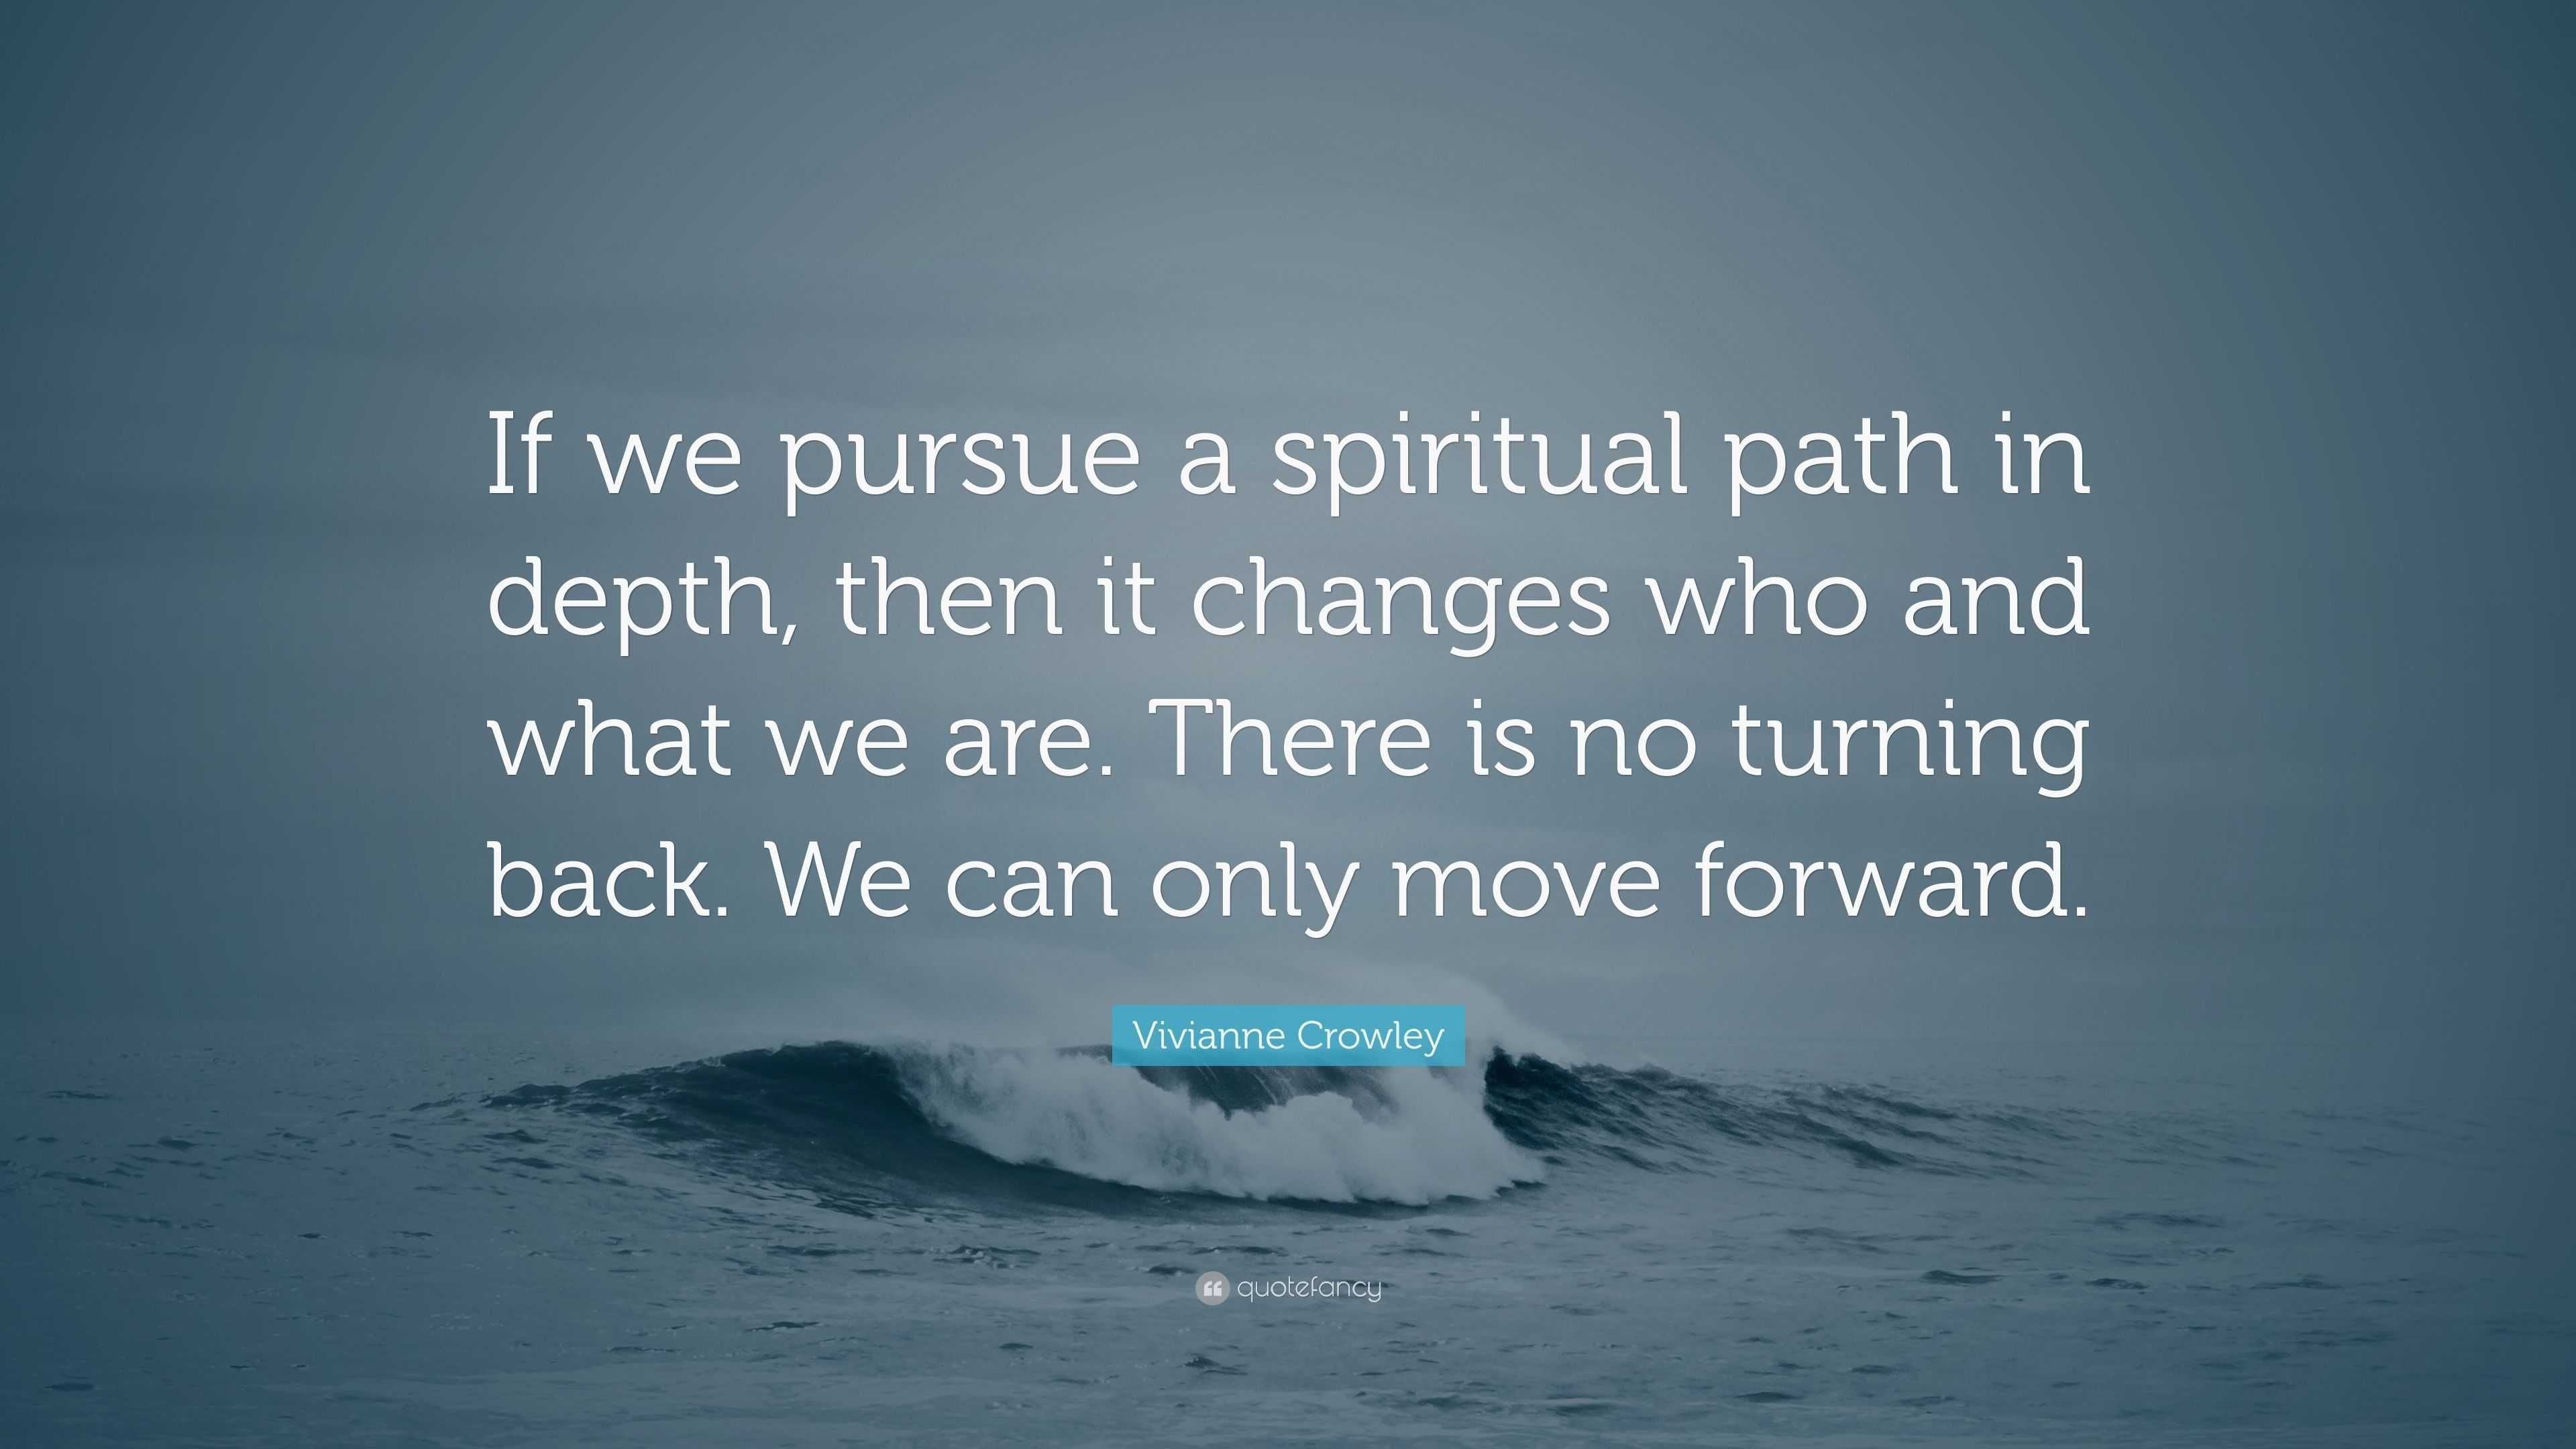 Vivianne Crowley Quote: “If we pursue a spiritual path in depth, then ...